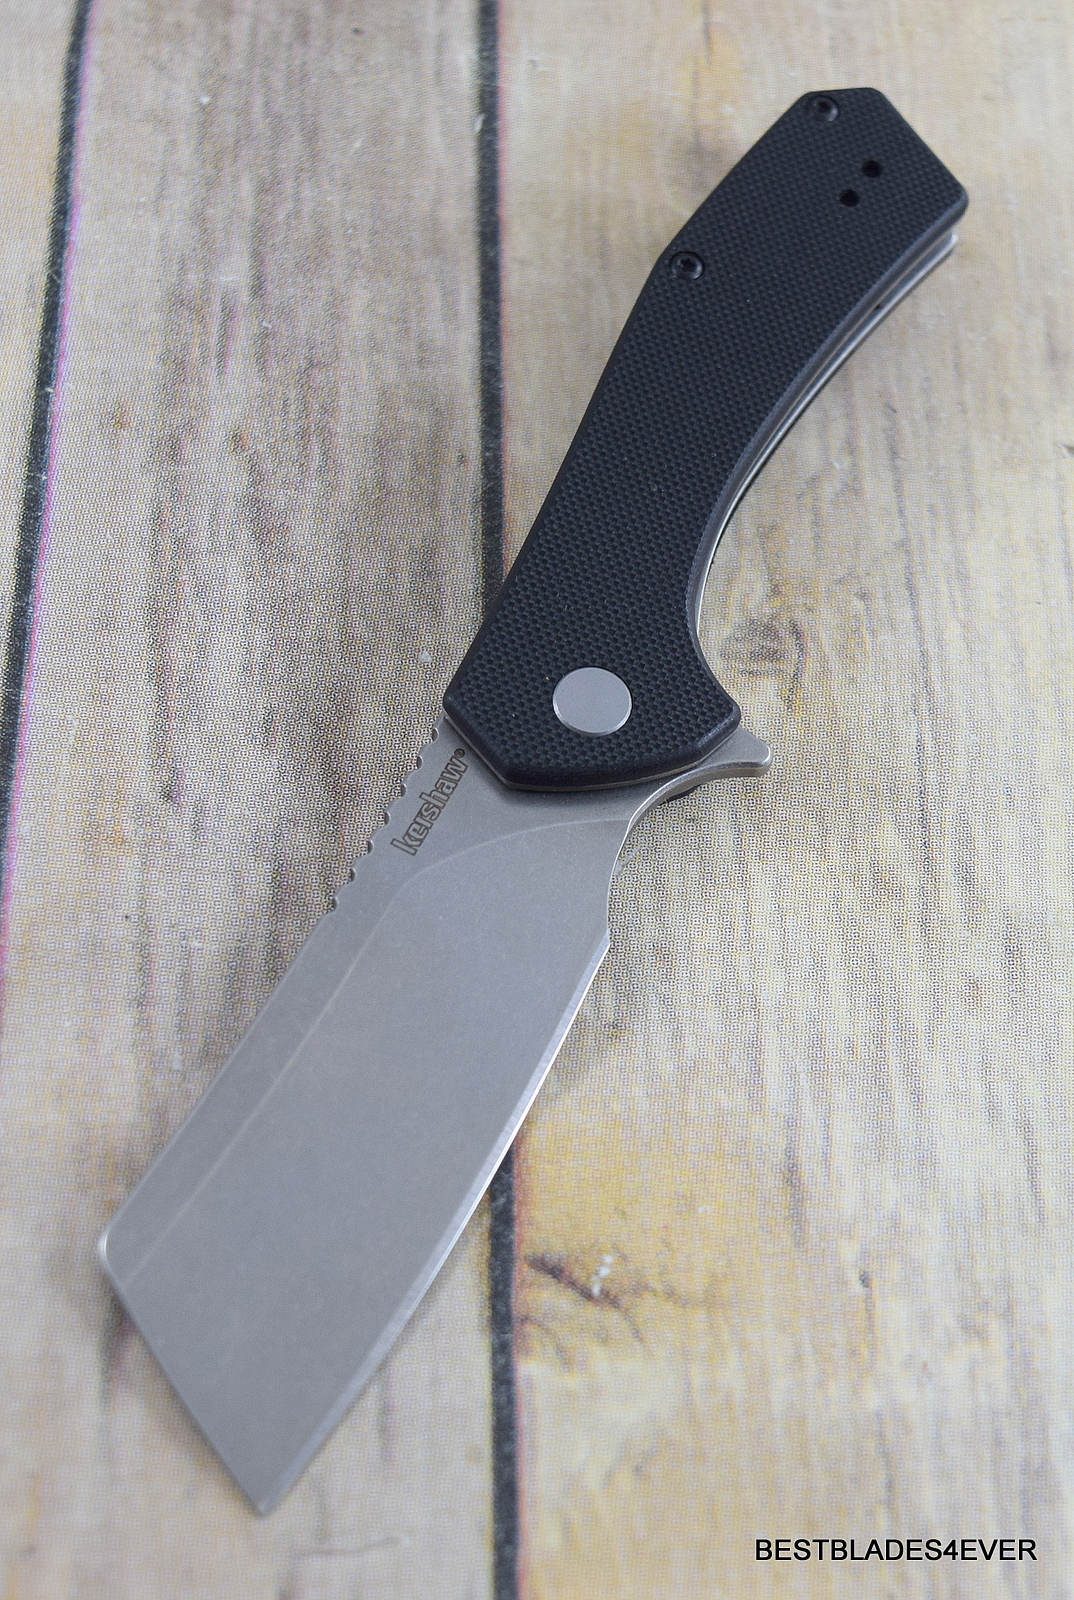 KERSHAW STATIC G10 FOLDING KNIFE RAZOR SHARP BLADE WITH POCKET CLIP